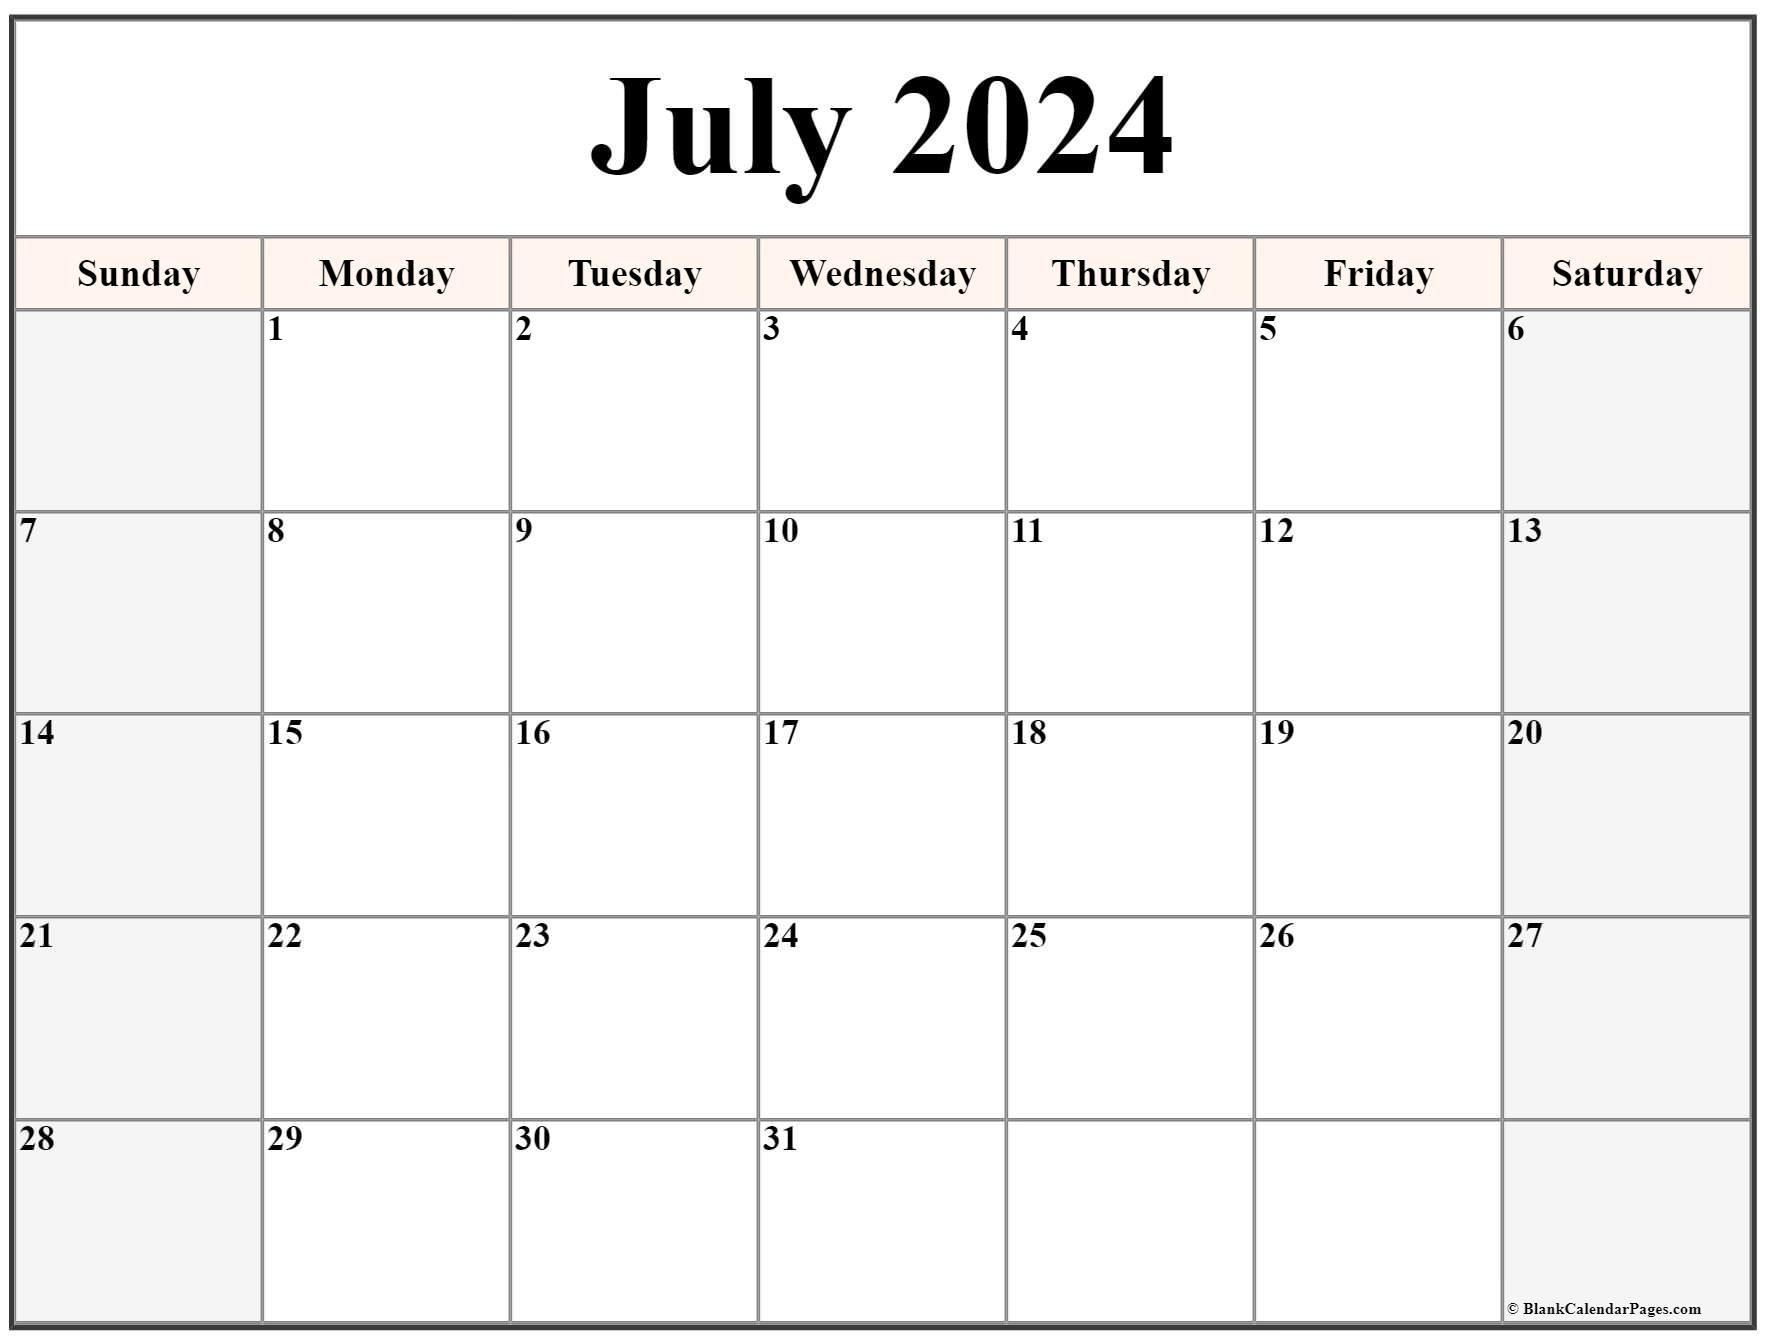 July 2024 Calendar | Free Printable Calendar pertaining to Free July 2023 To June 2024 Calendar